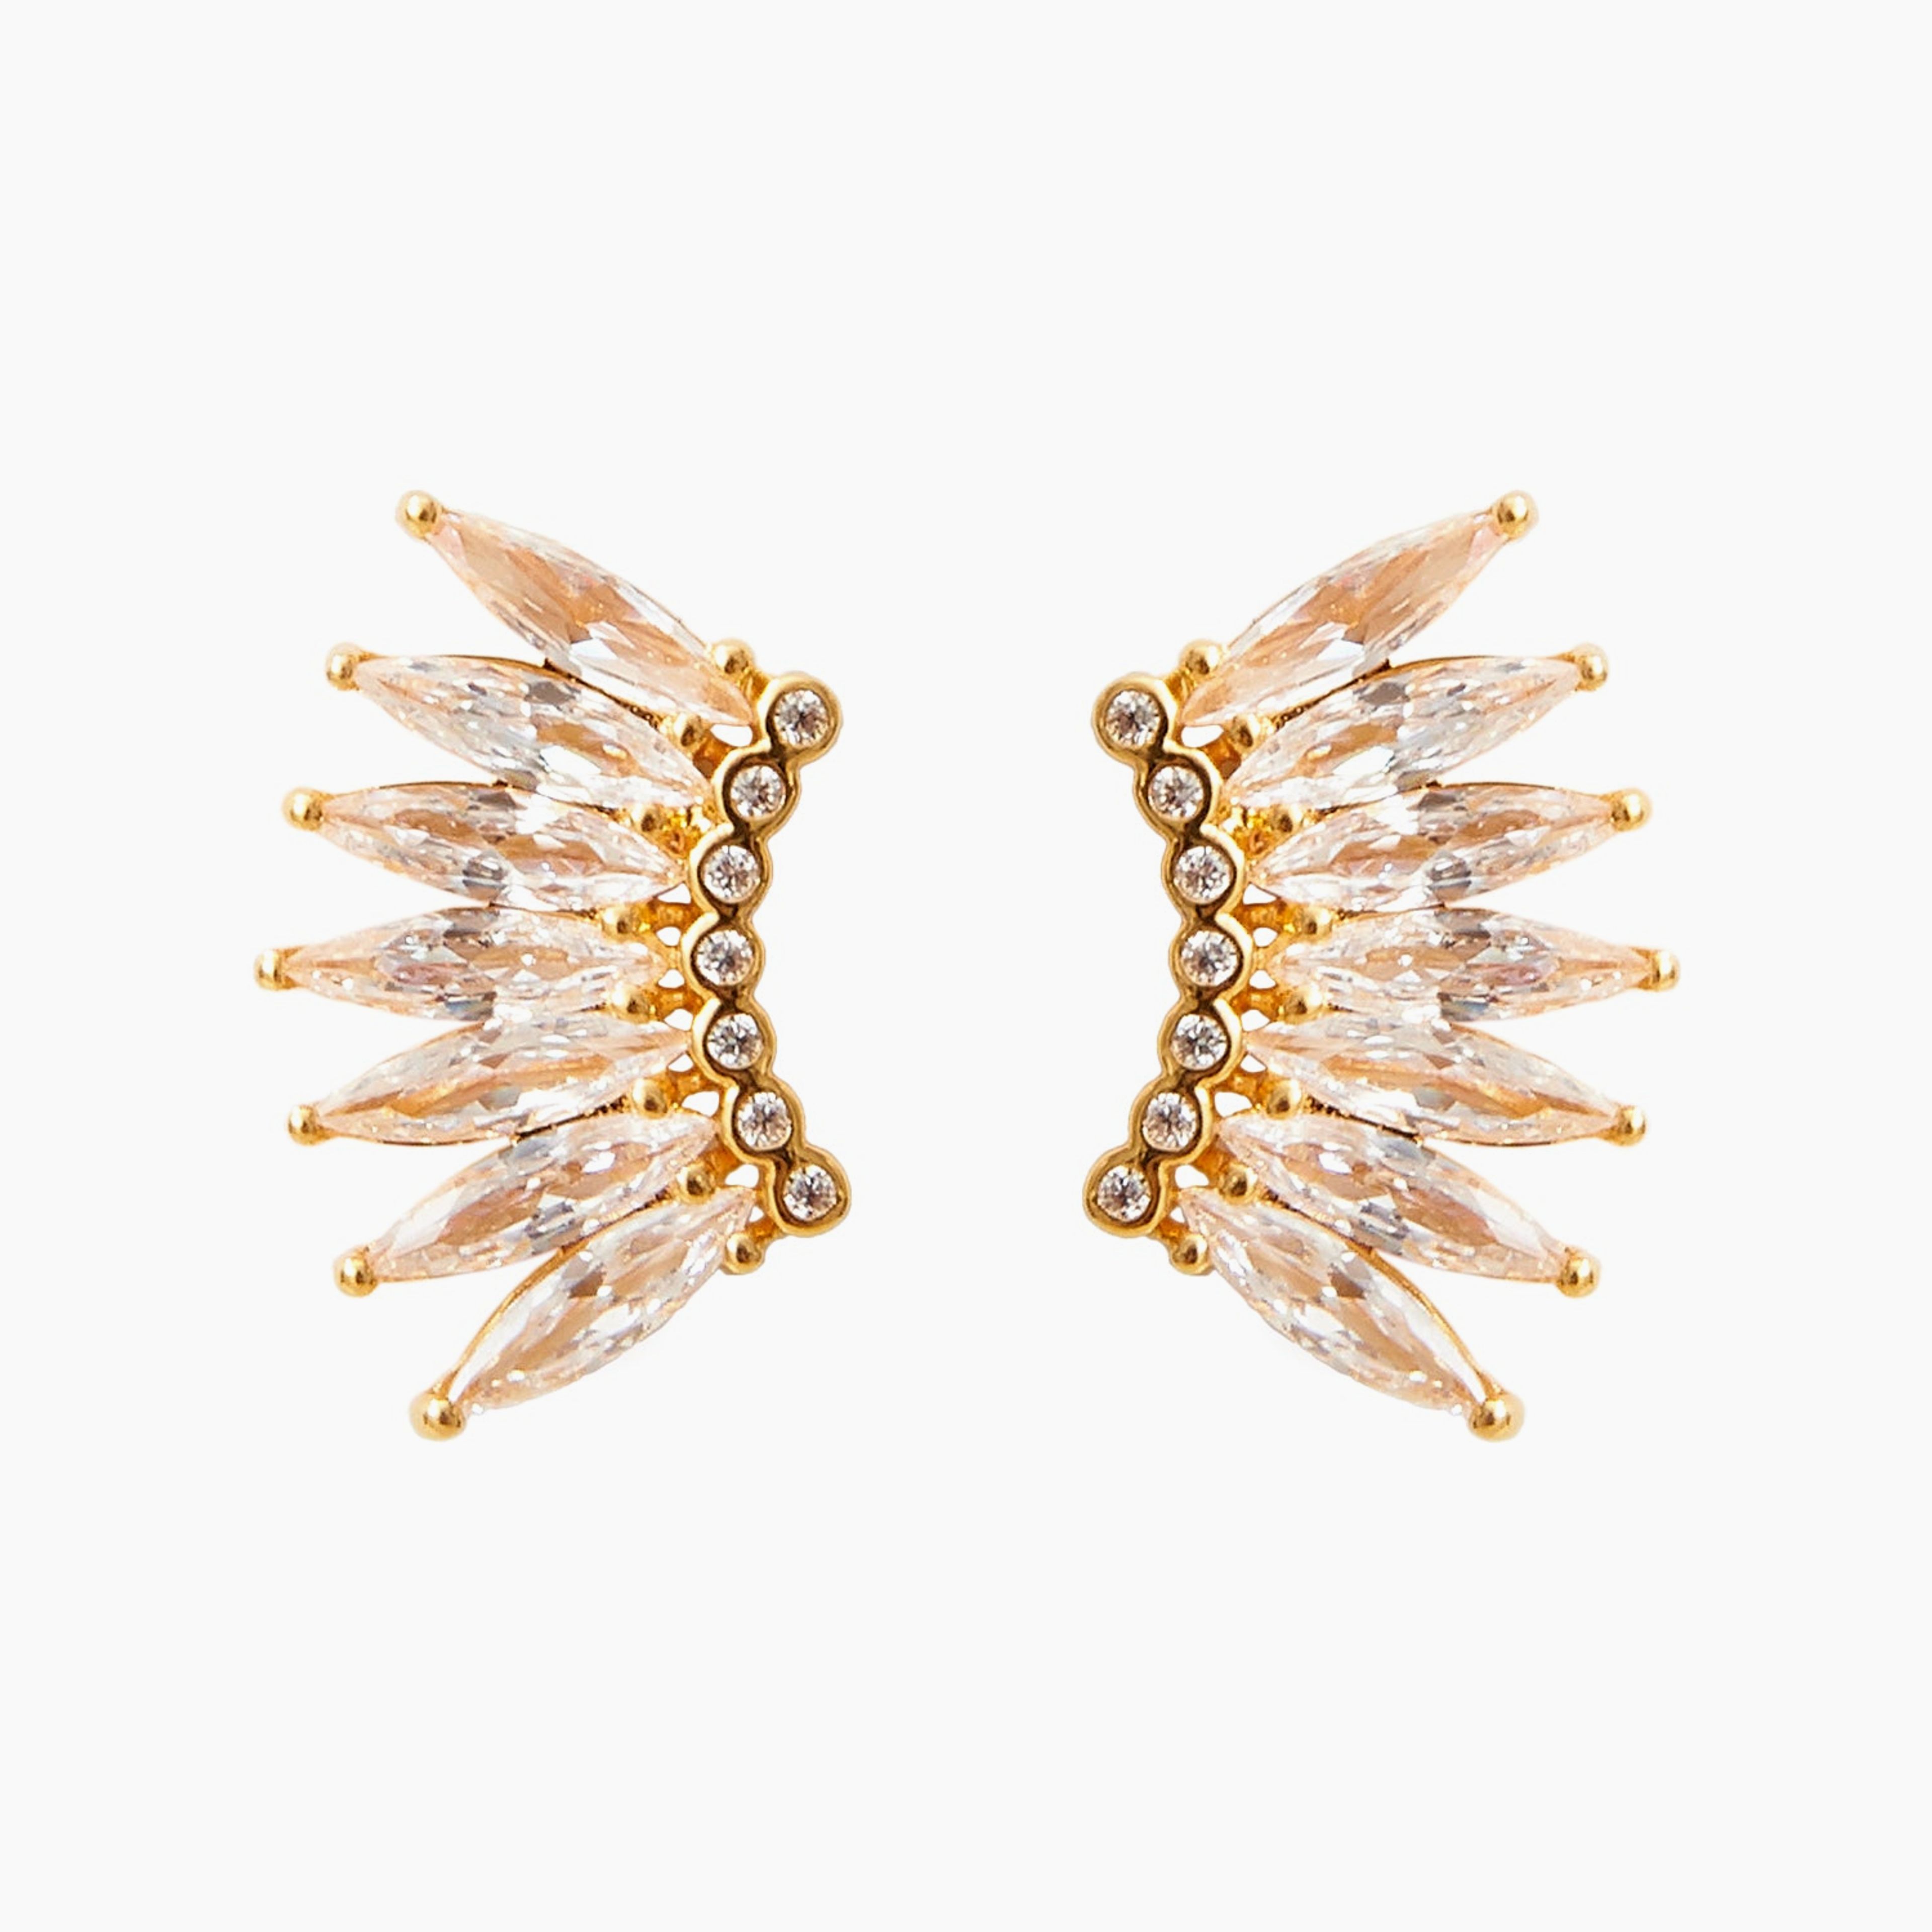 Petite Crystal Madeline Earrings Gold